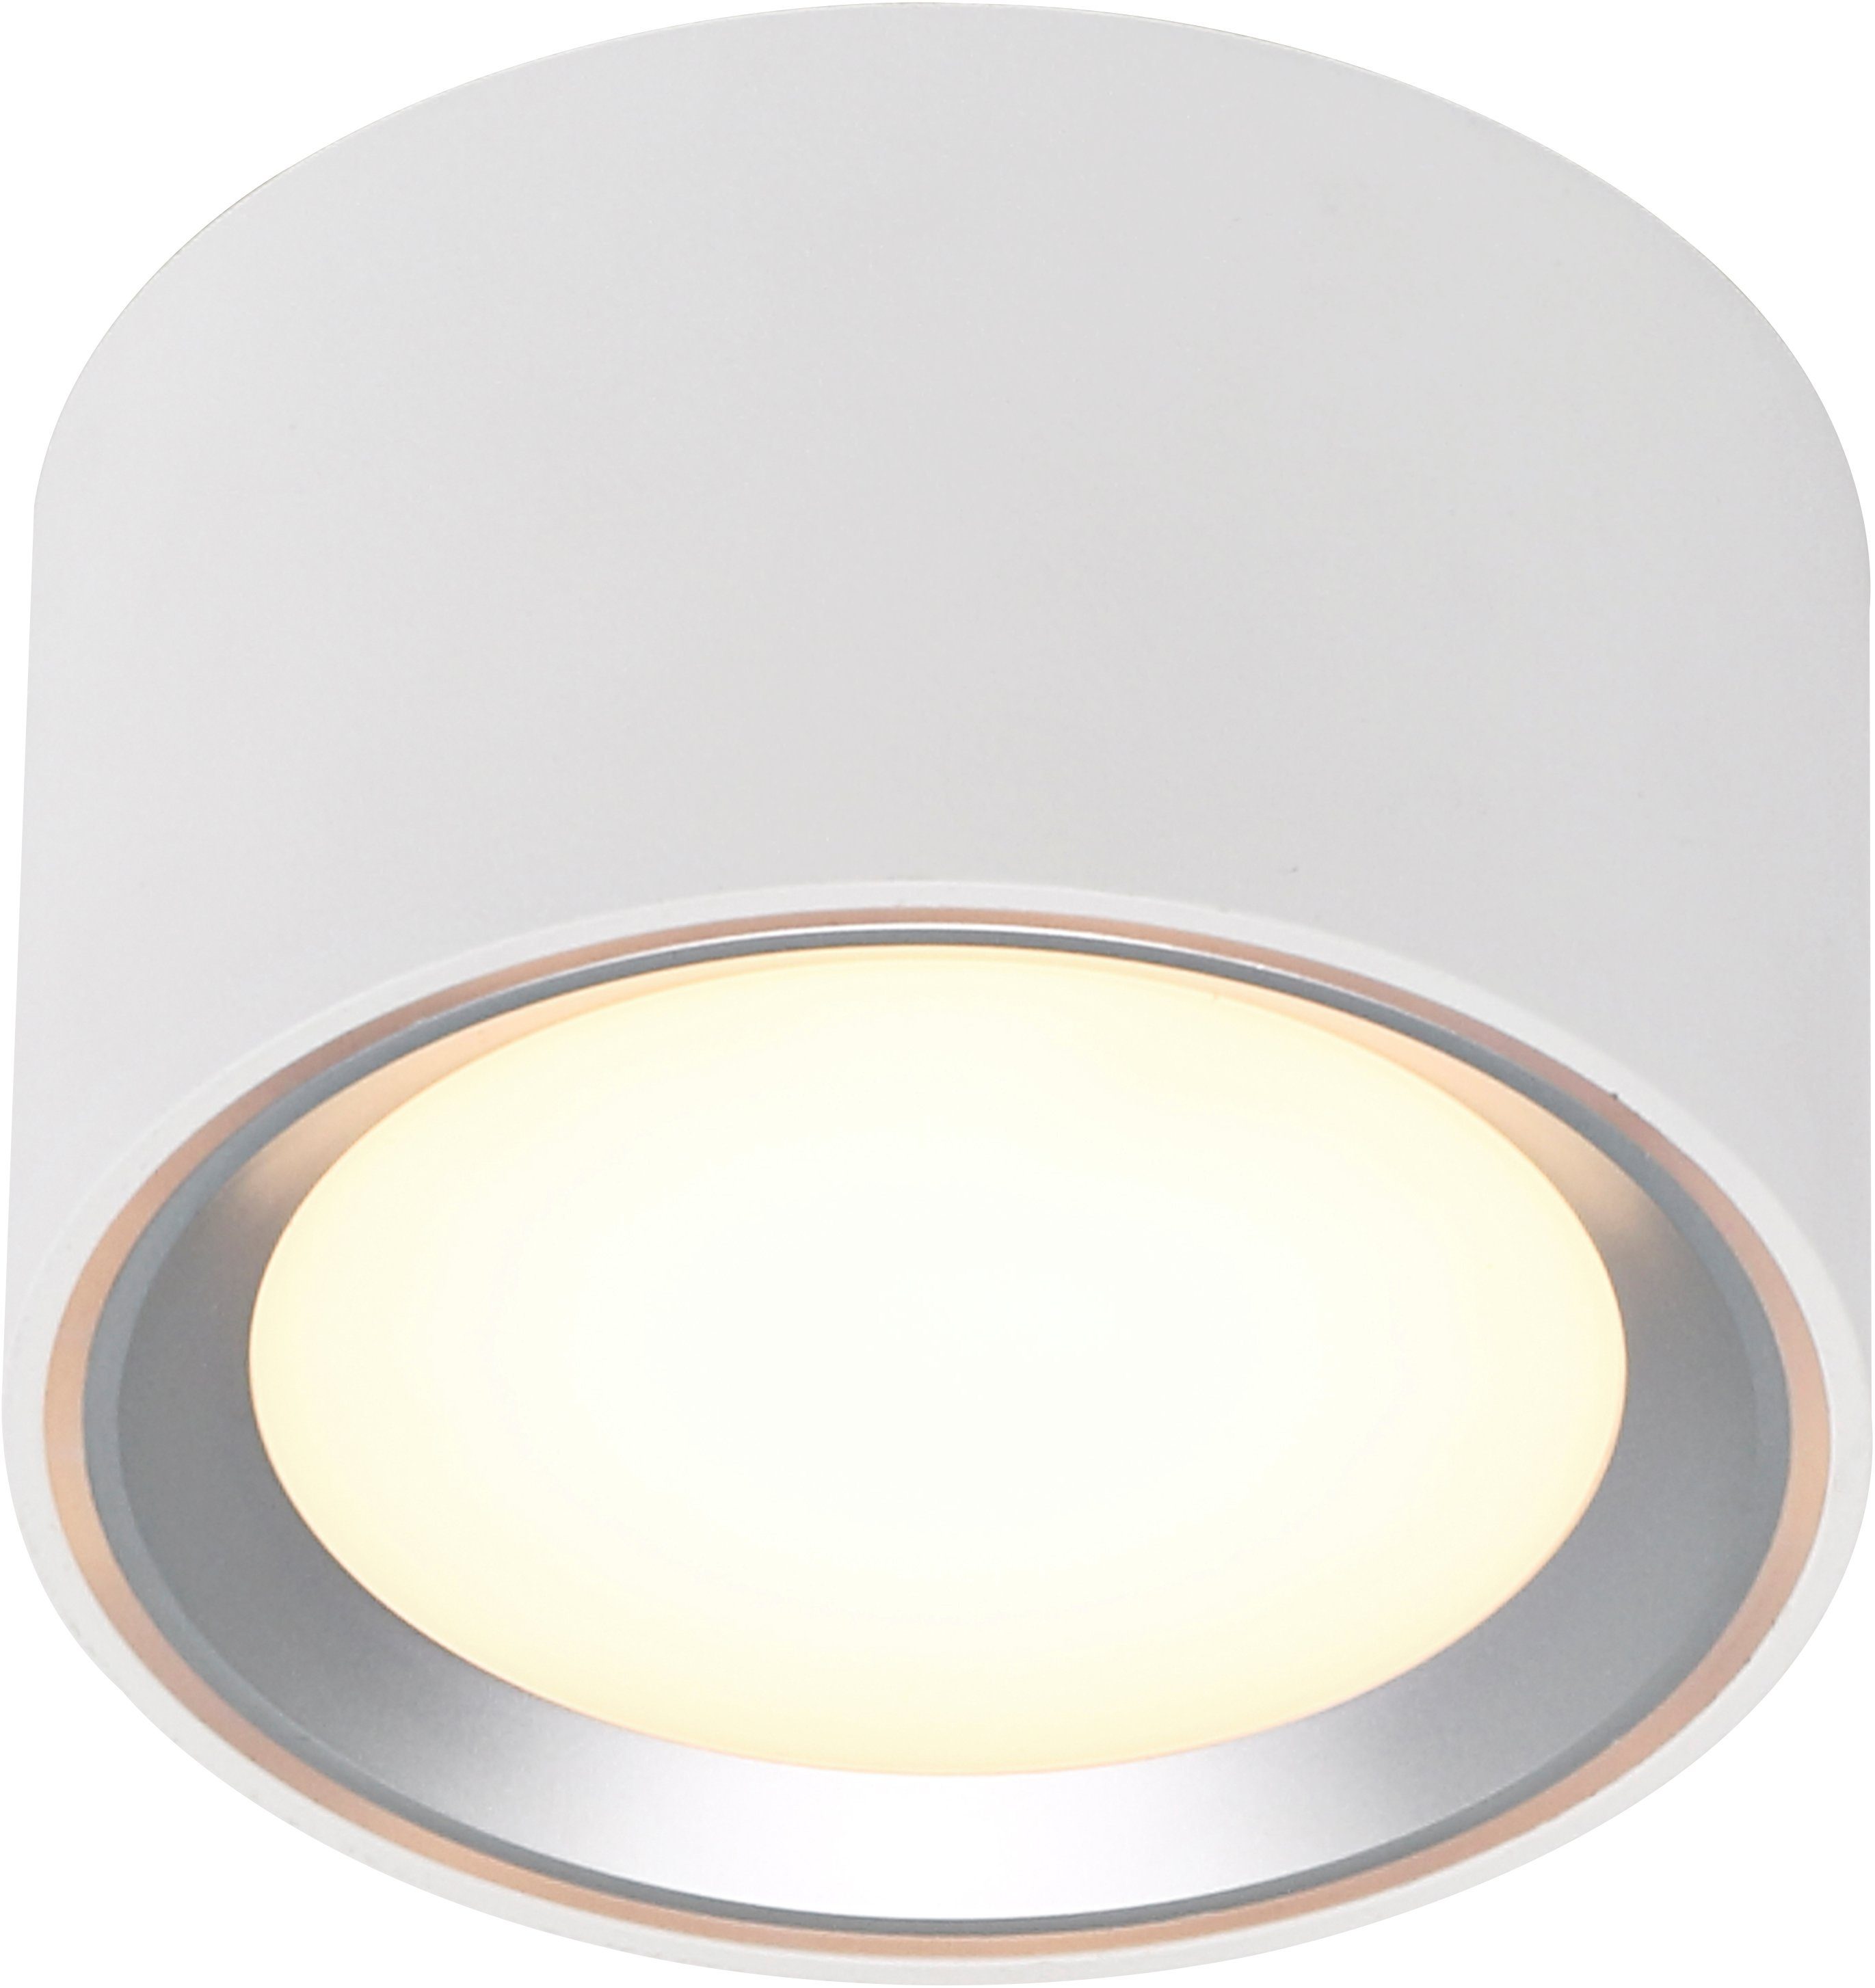 Nordlux LED Dezentes, fest Warmweiß, LED unauffälliges integriert, Deckenleuchte, Design LED Dimmfunktion, LED Fallon, Deckenlampe, Deckenspot